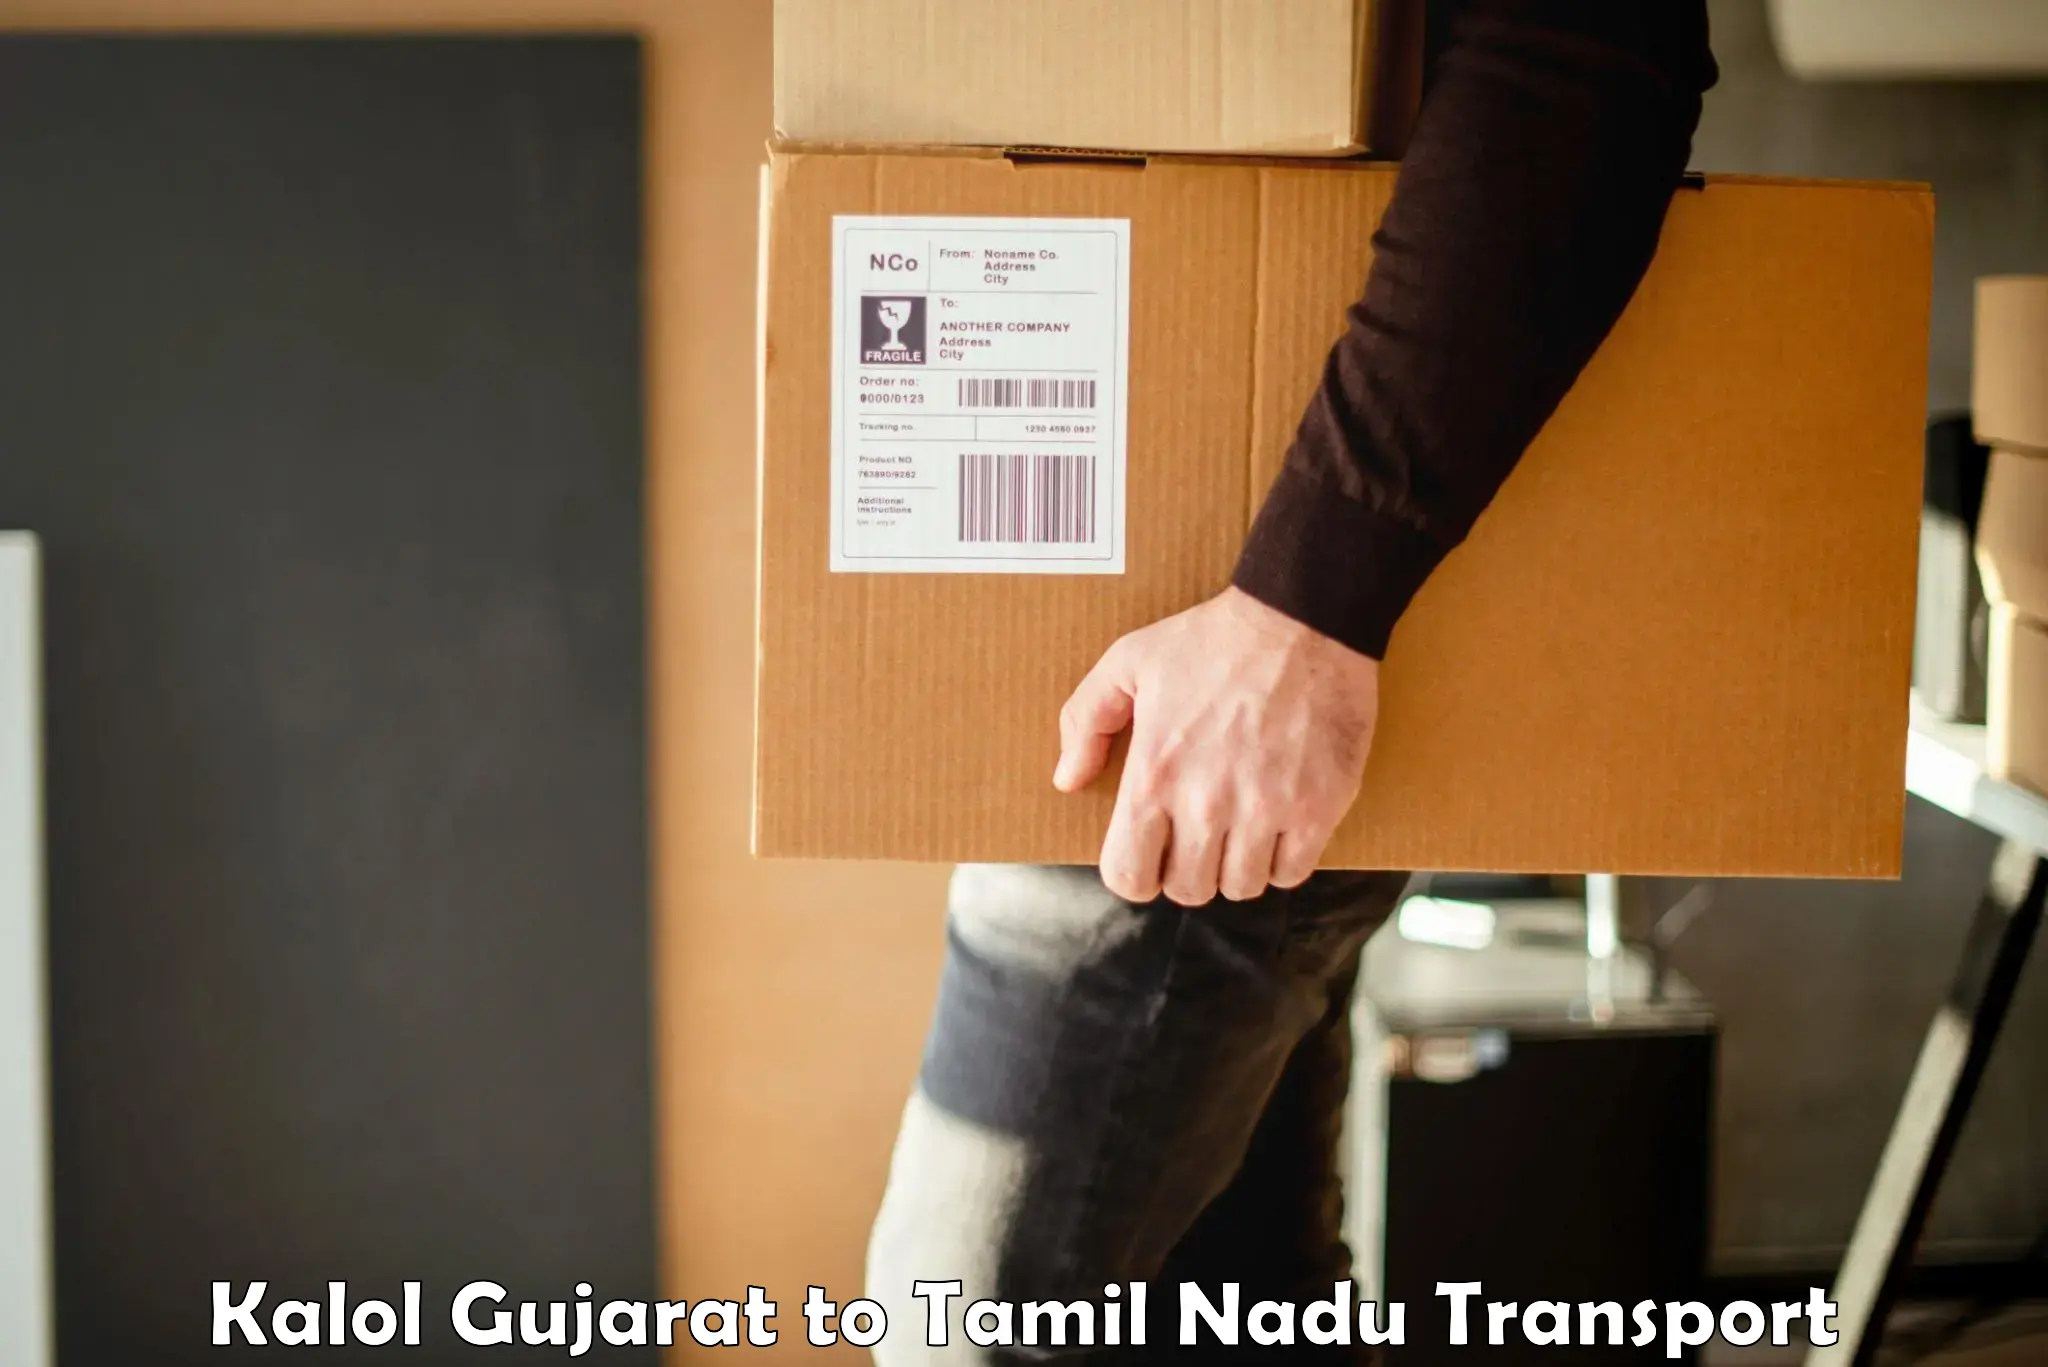 Lorry transport service Kalol Gujarat to Vilathikulam